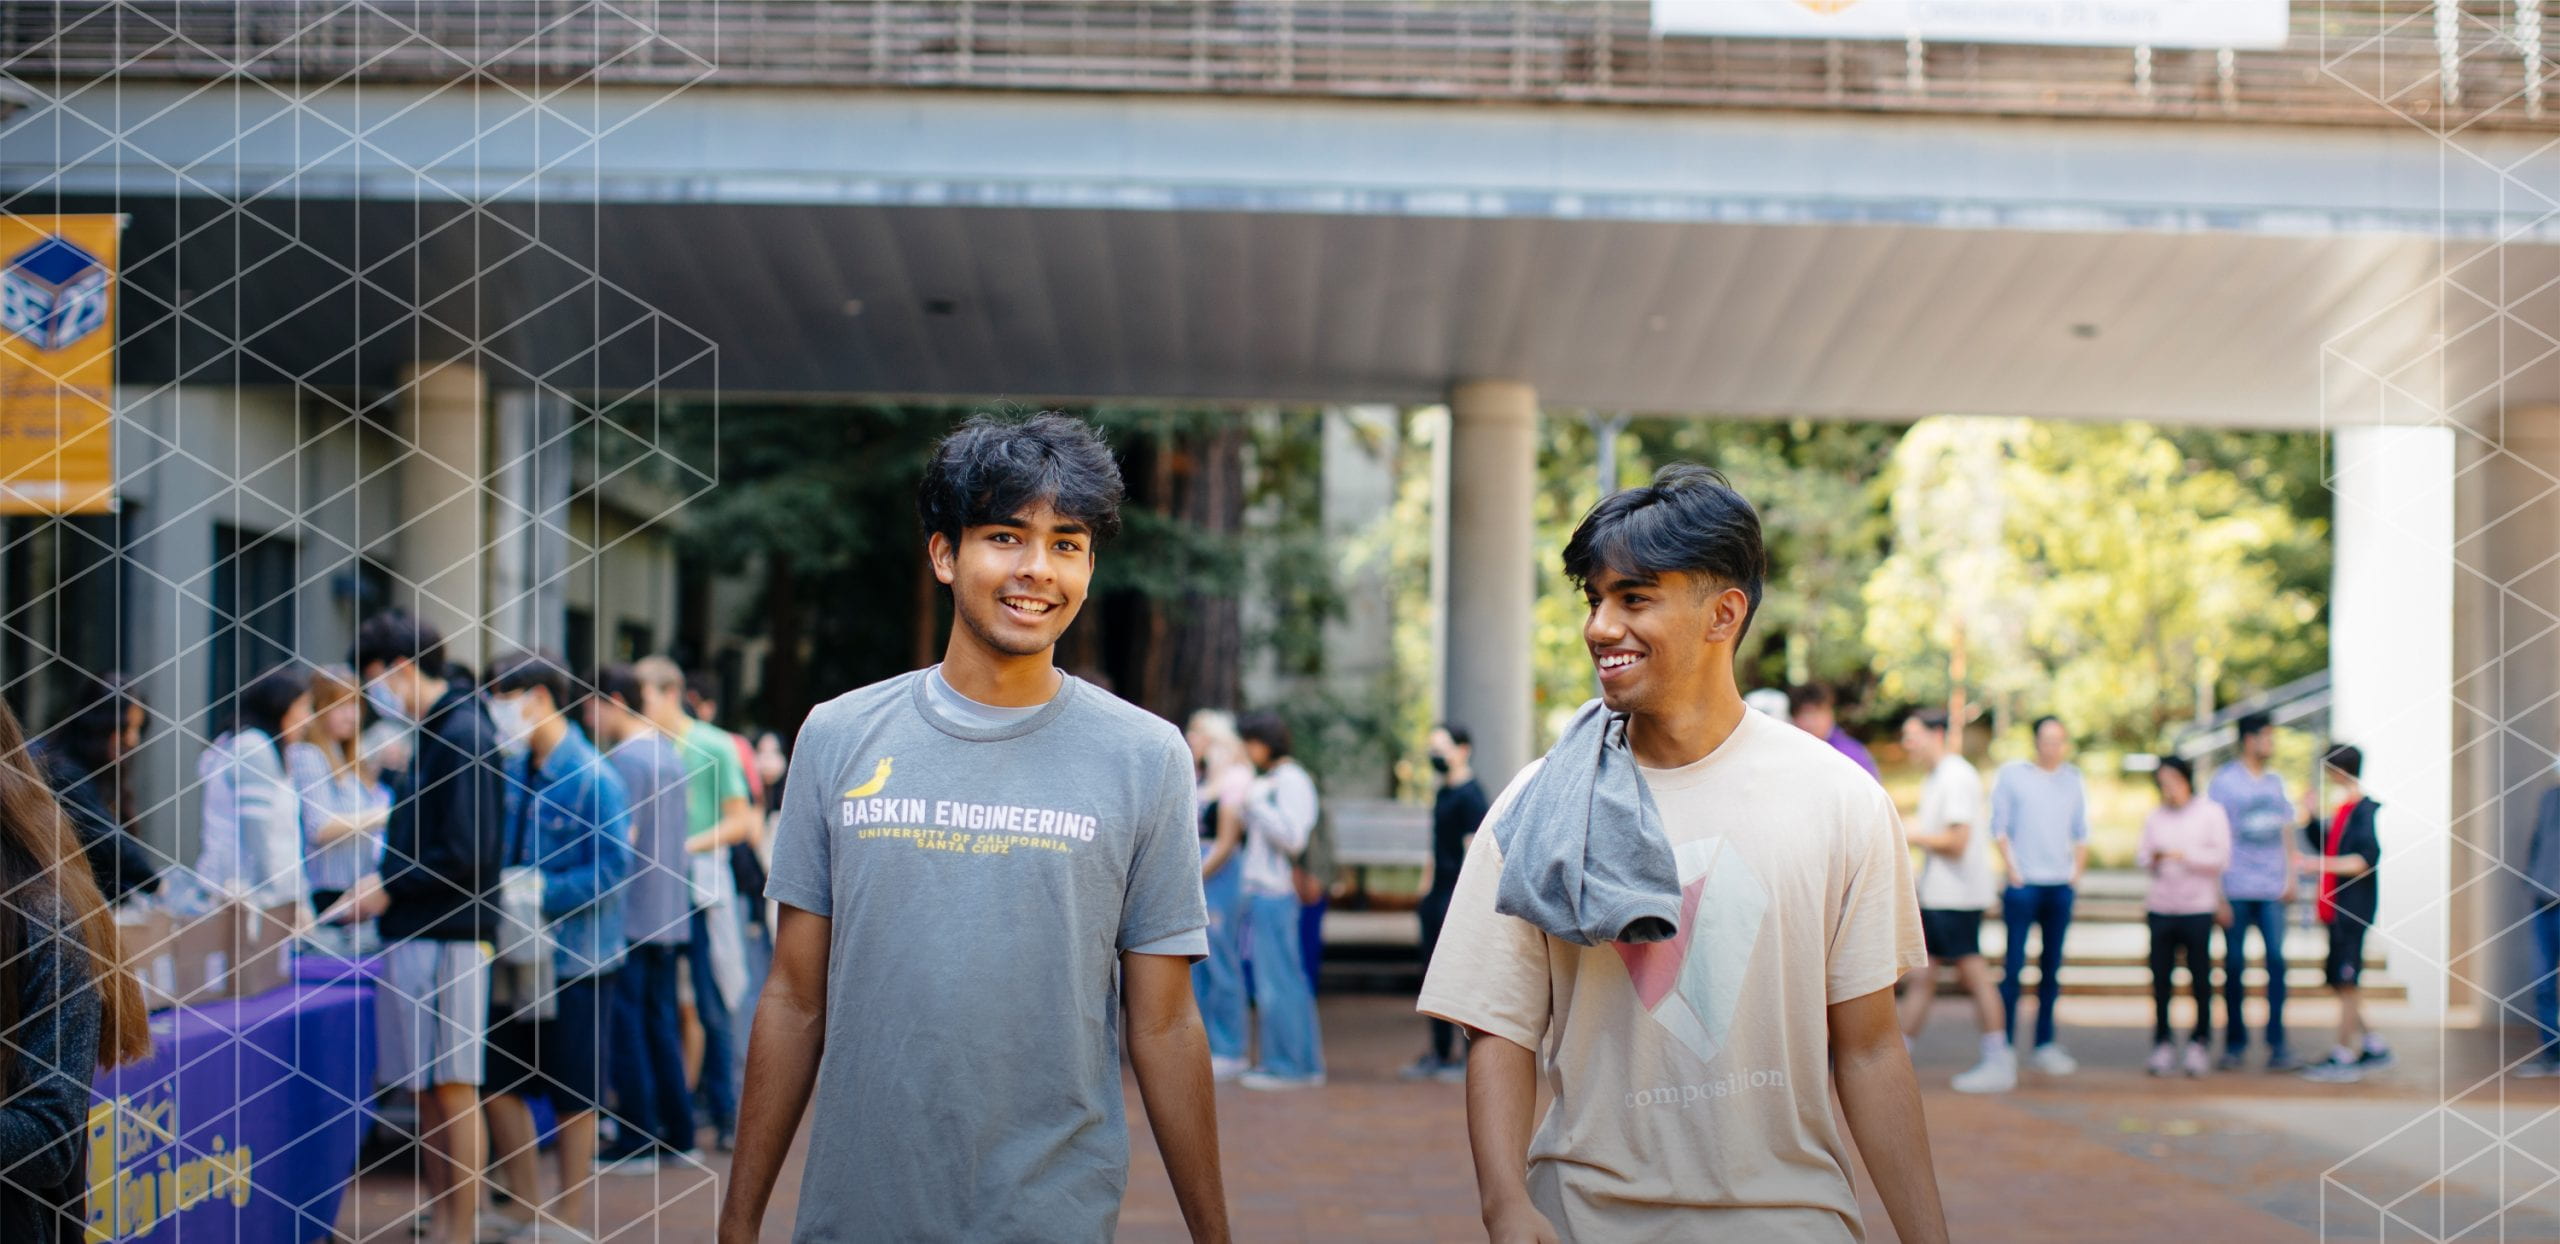 Baskin Engineering students walking in the courtyard